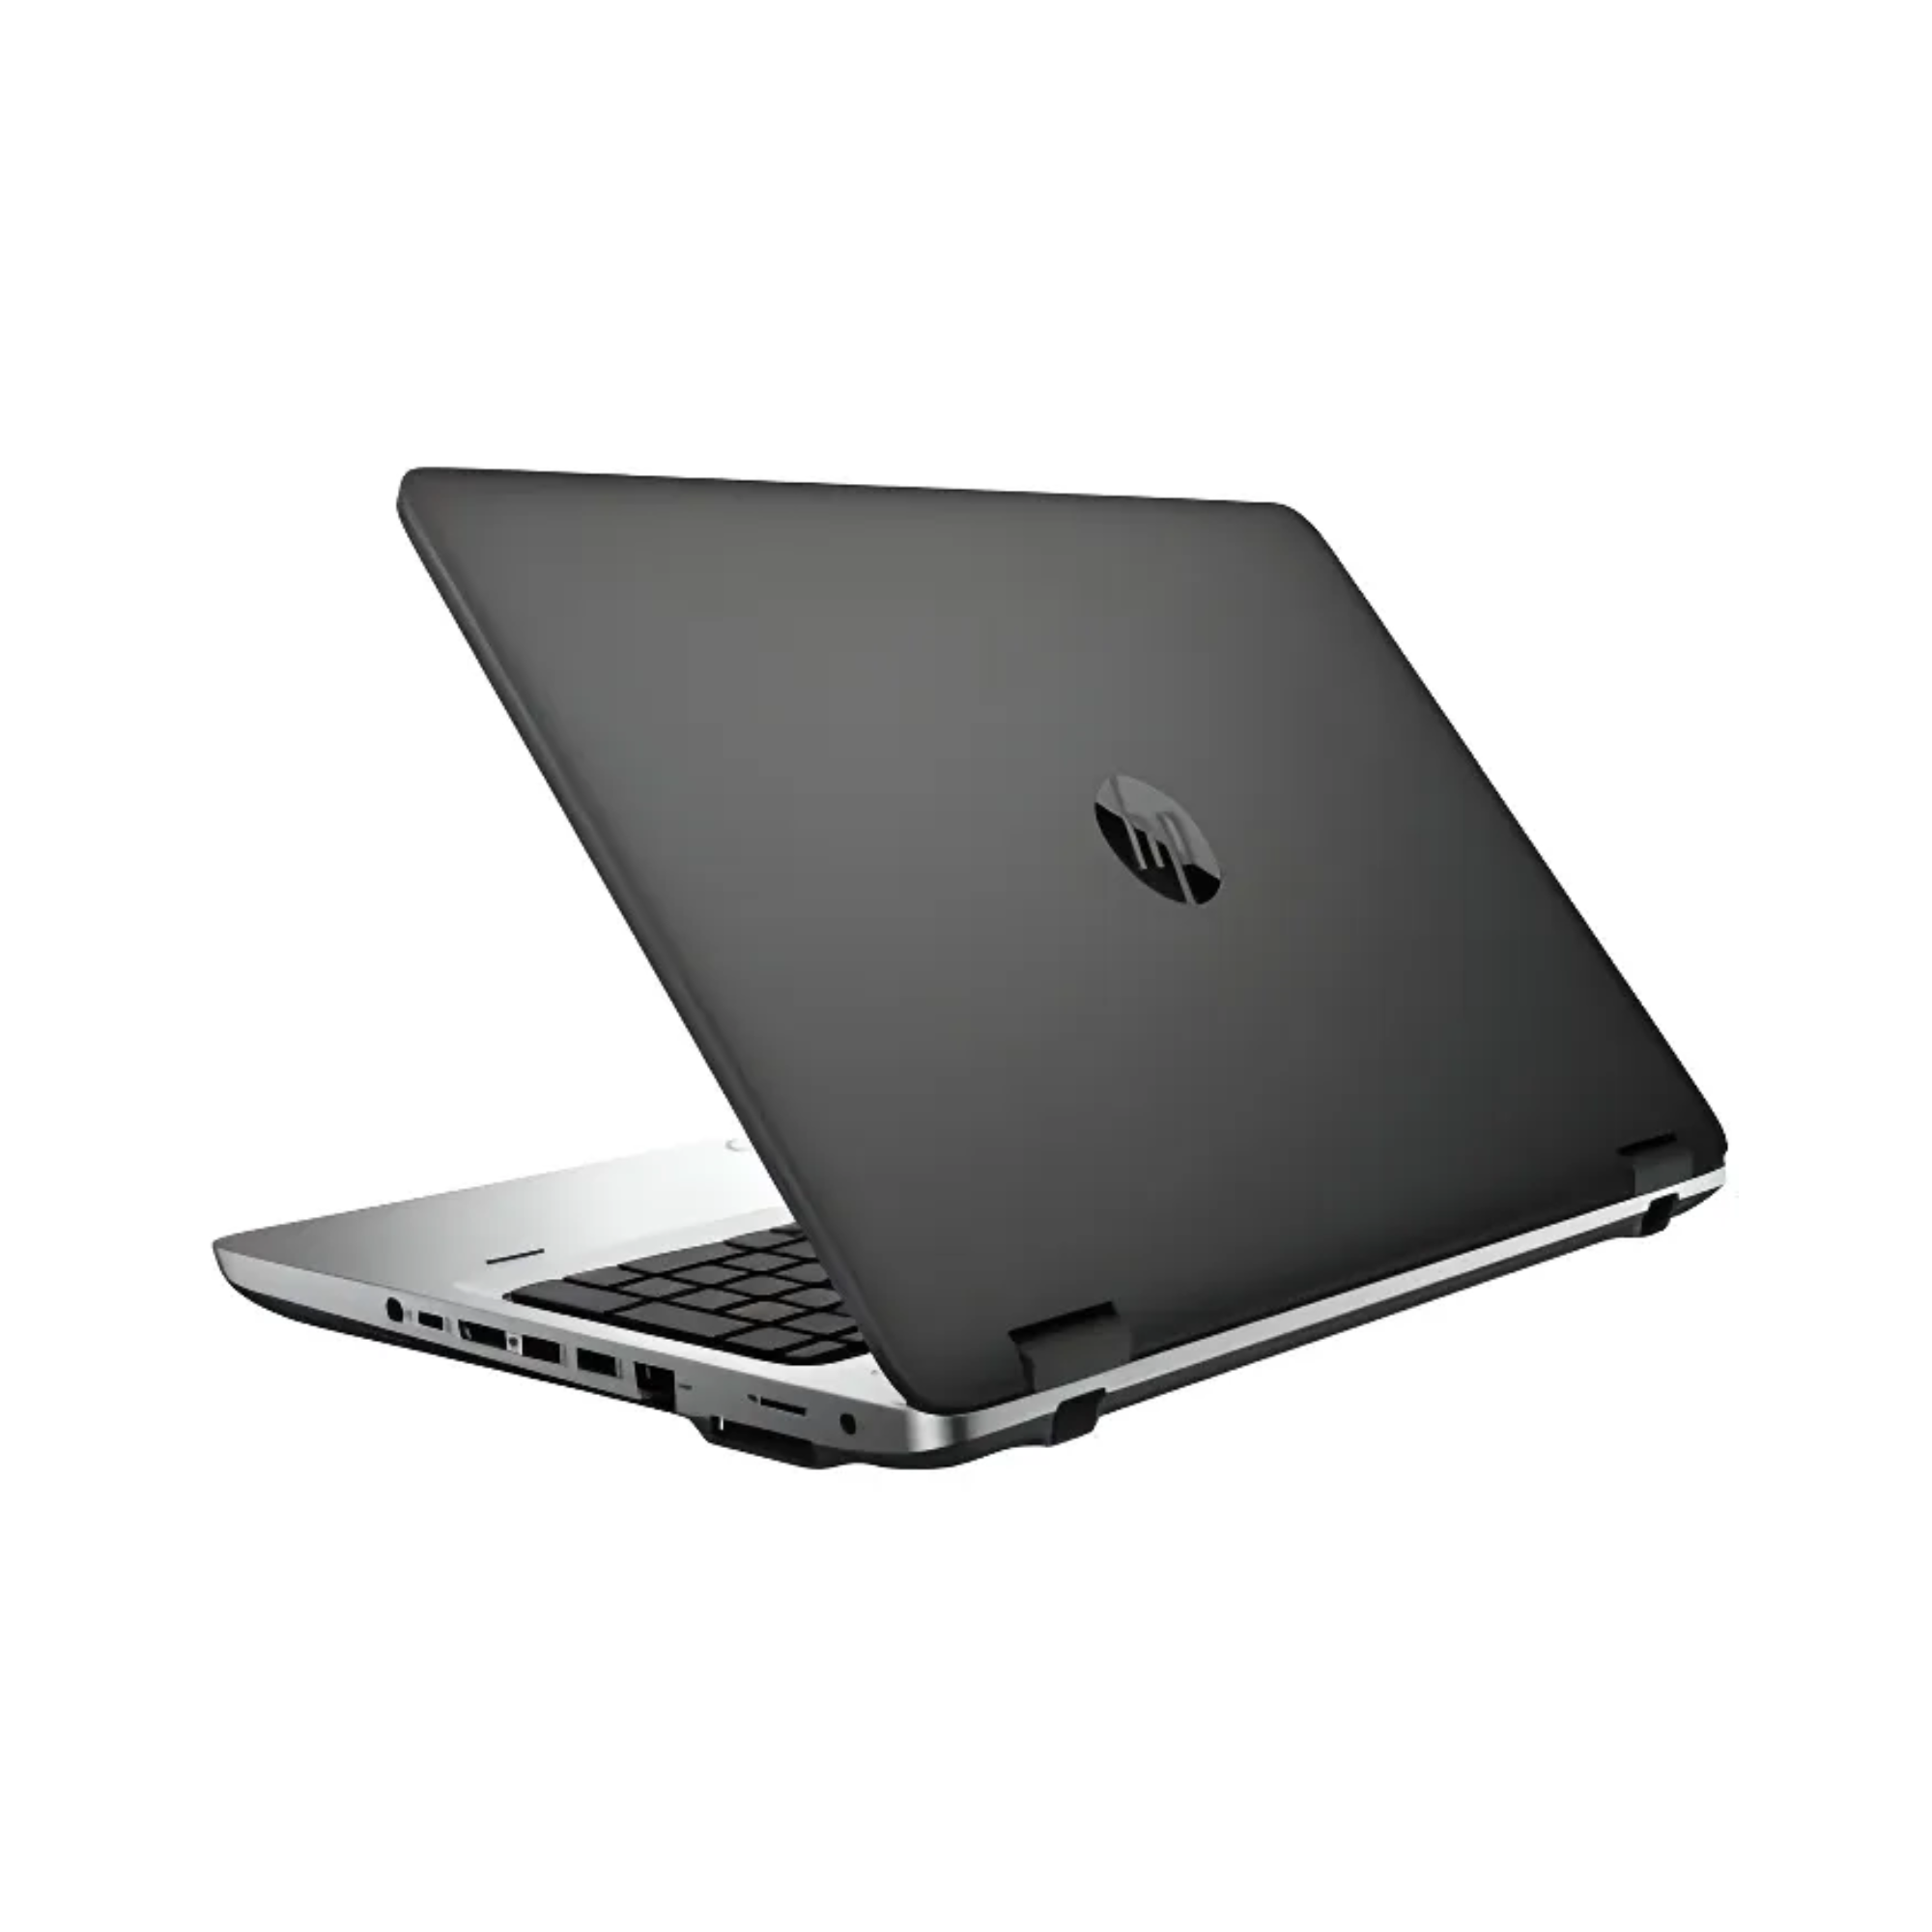 HP Probook 650 G2 i5 (6th Gen) 8GB RAM 256GB SSD 15.6